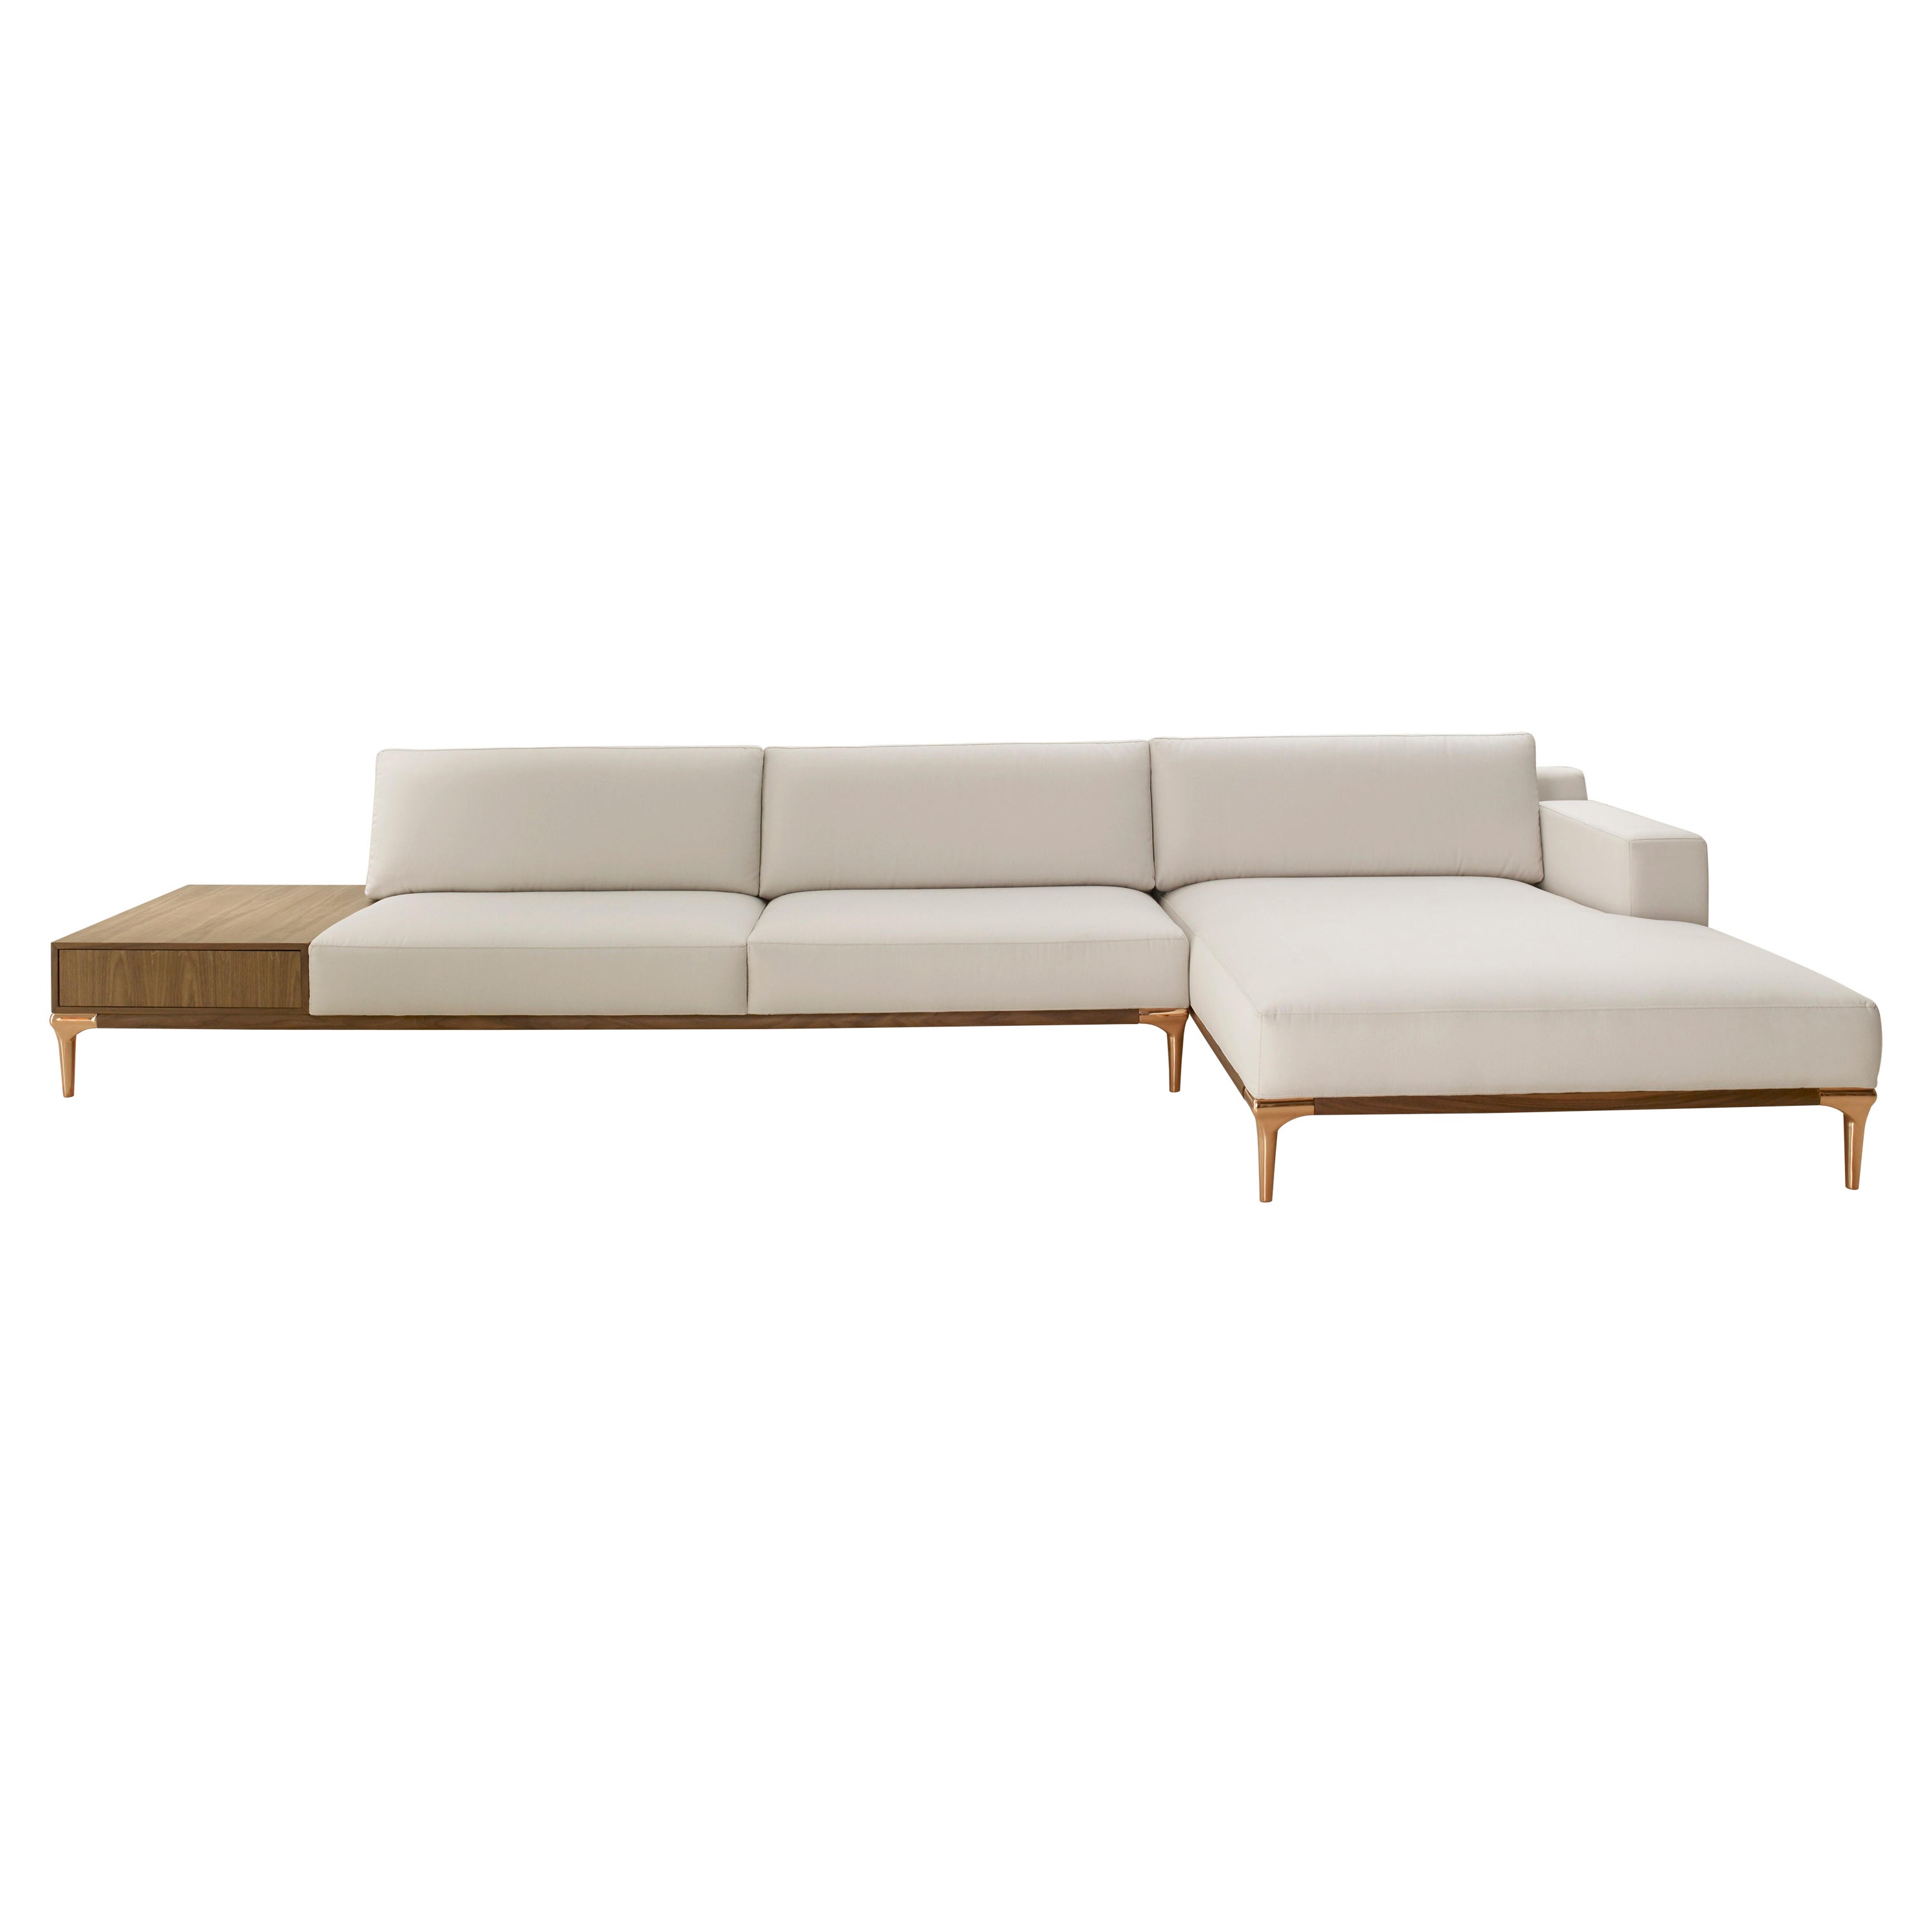 Upholstery Fabric, Wood Sidetable, Sectional Sofa Nixon